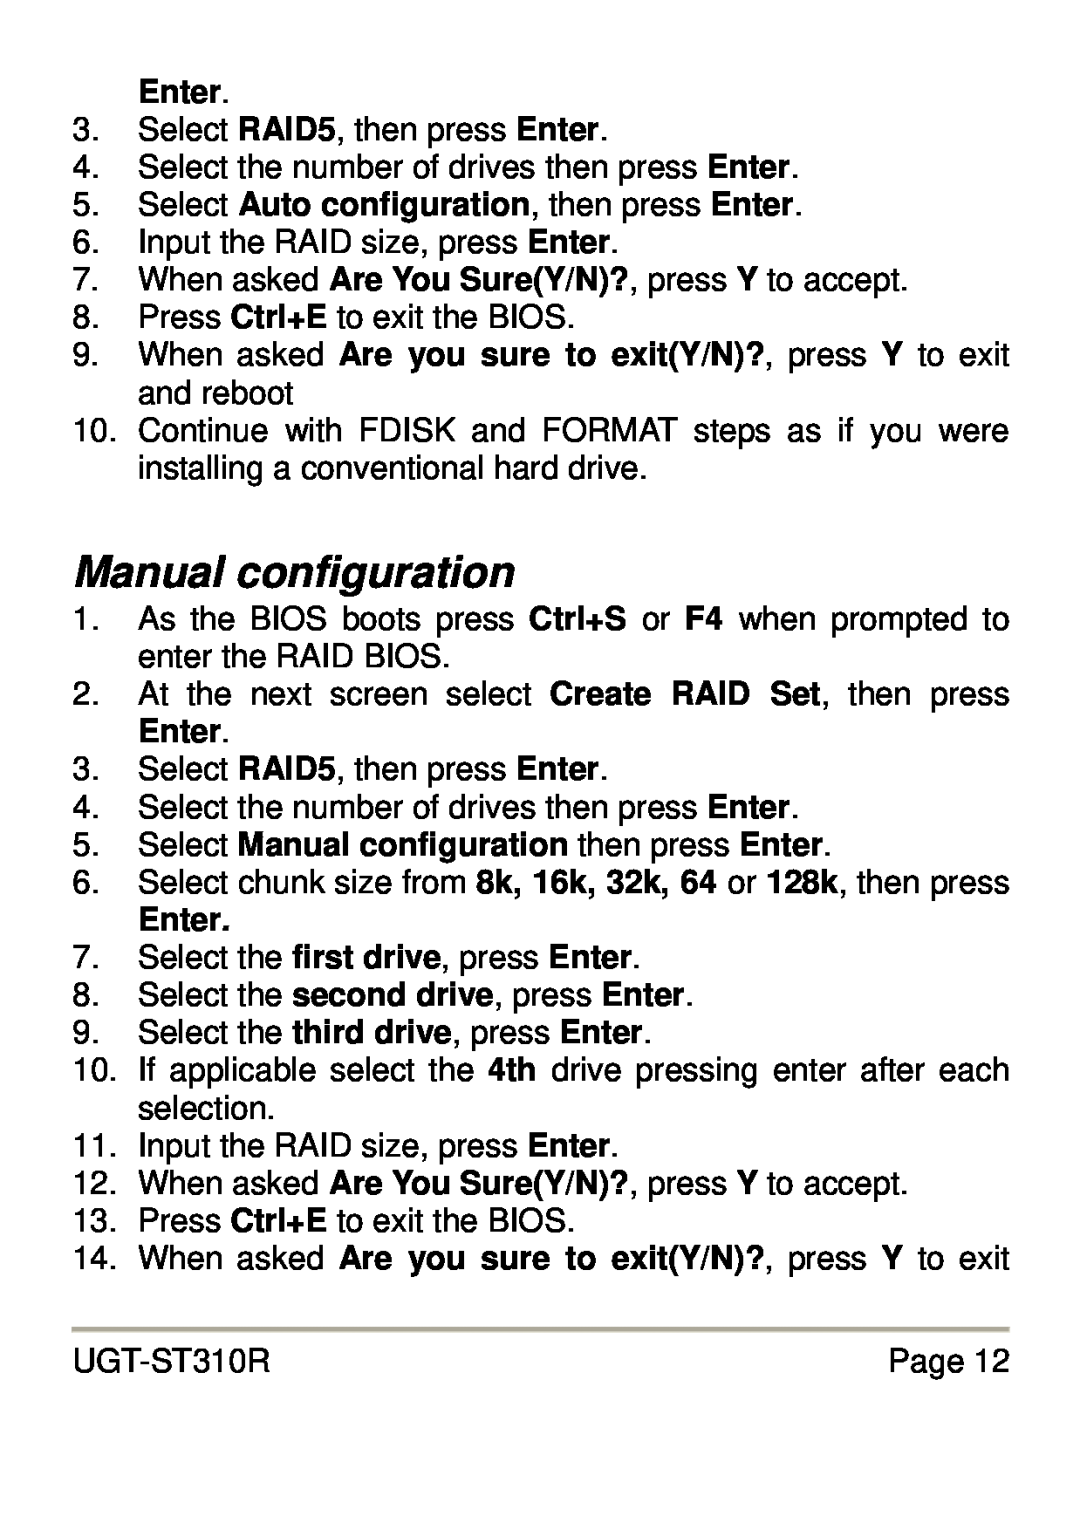 Vantec UGT-ST310R user manual Manual configuration, Select Auto configuration, then press Enter 